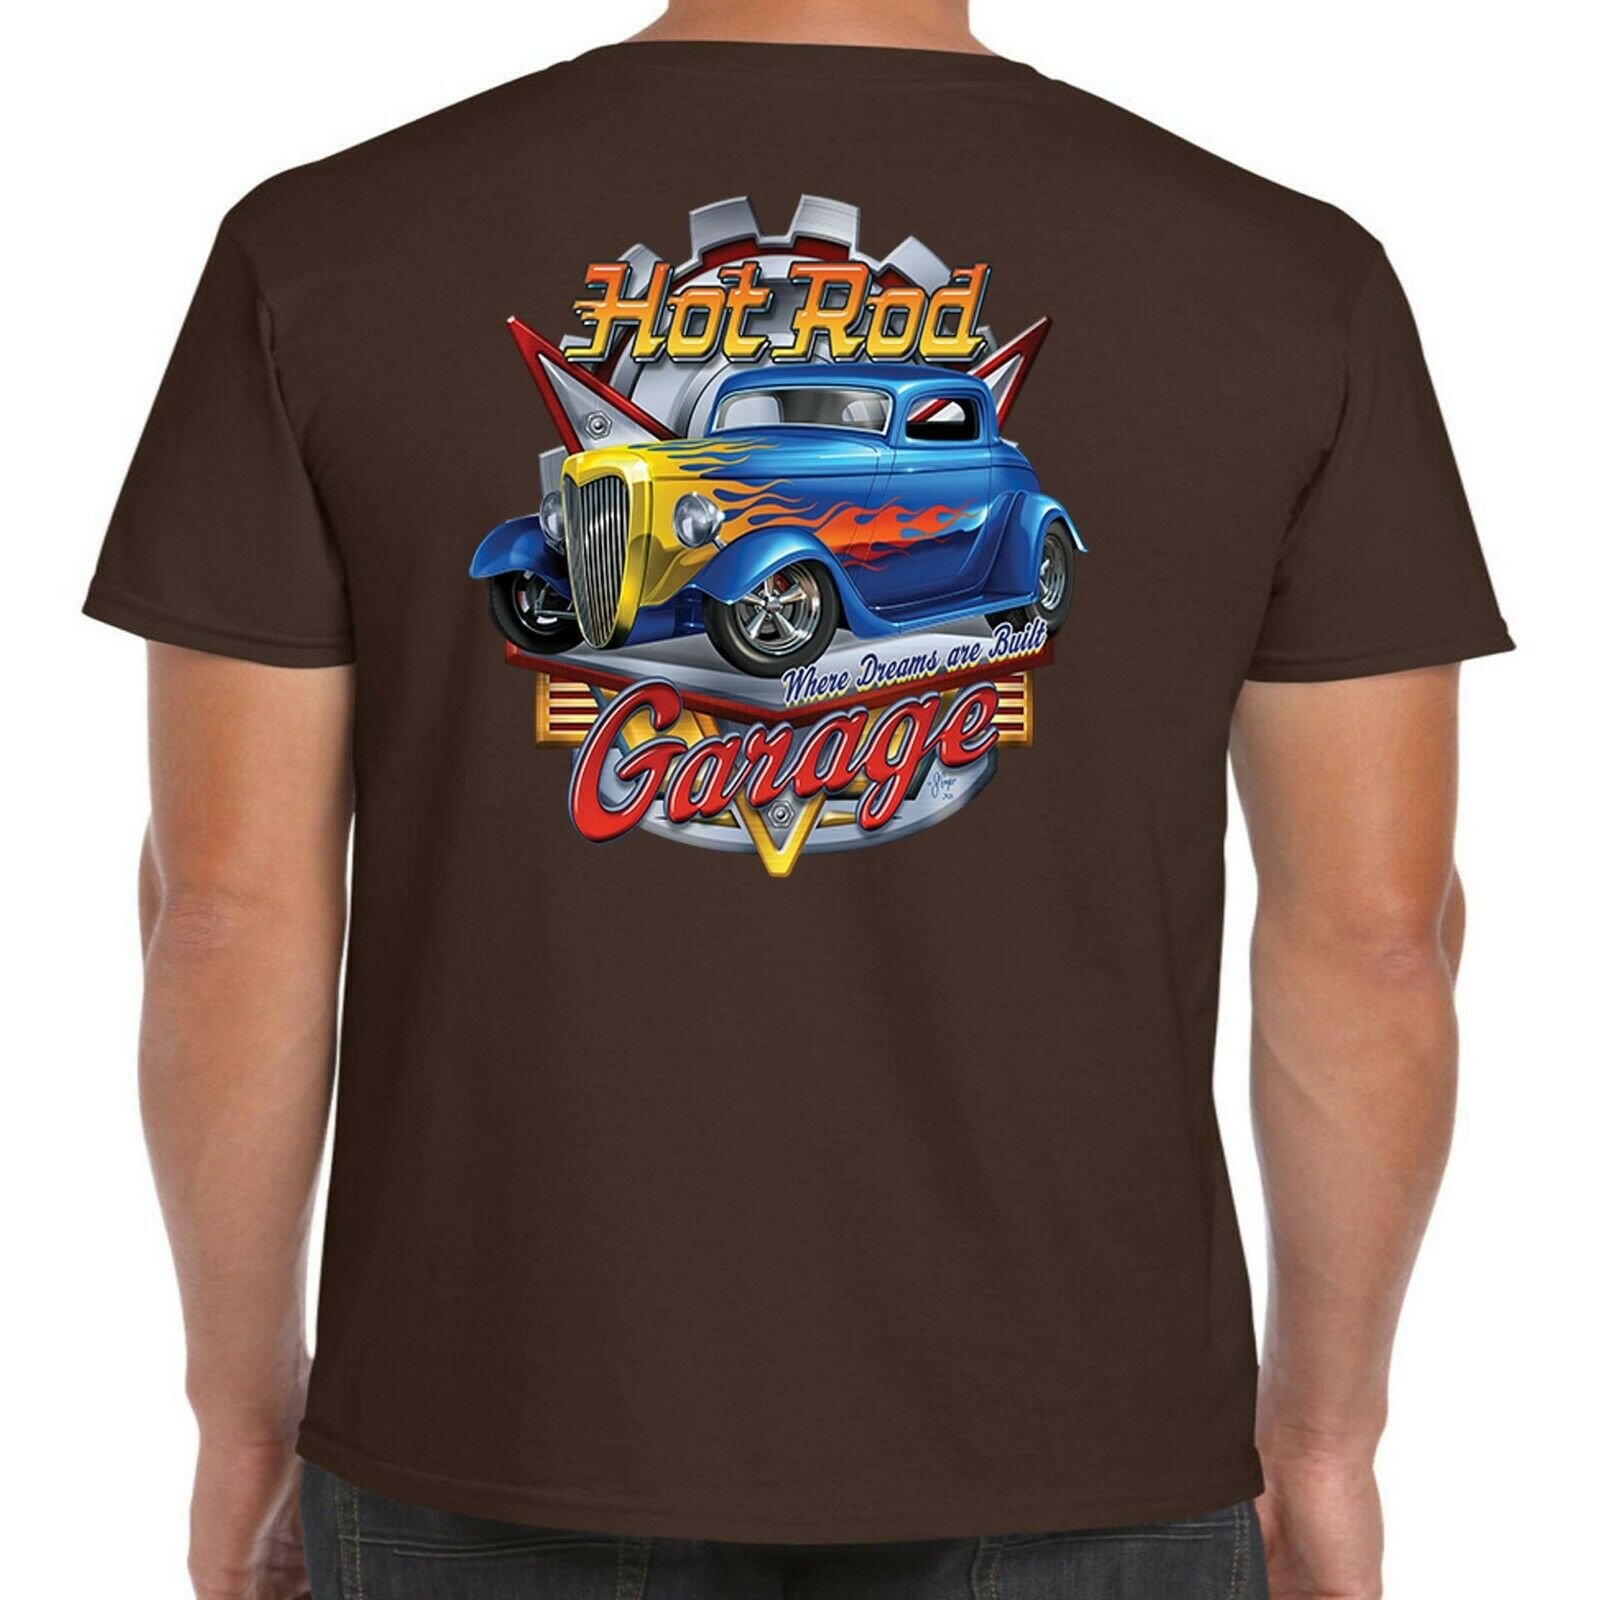 LA Hotrod T-Shirt Mens usa american classic vintage retro car rockabilly hot rod